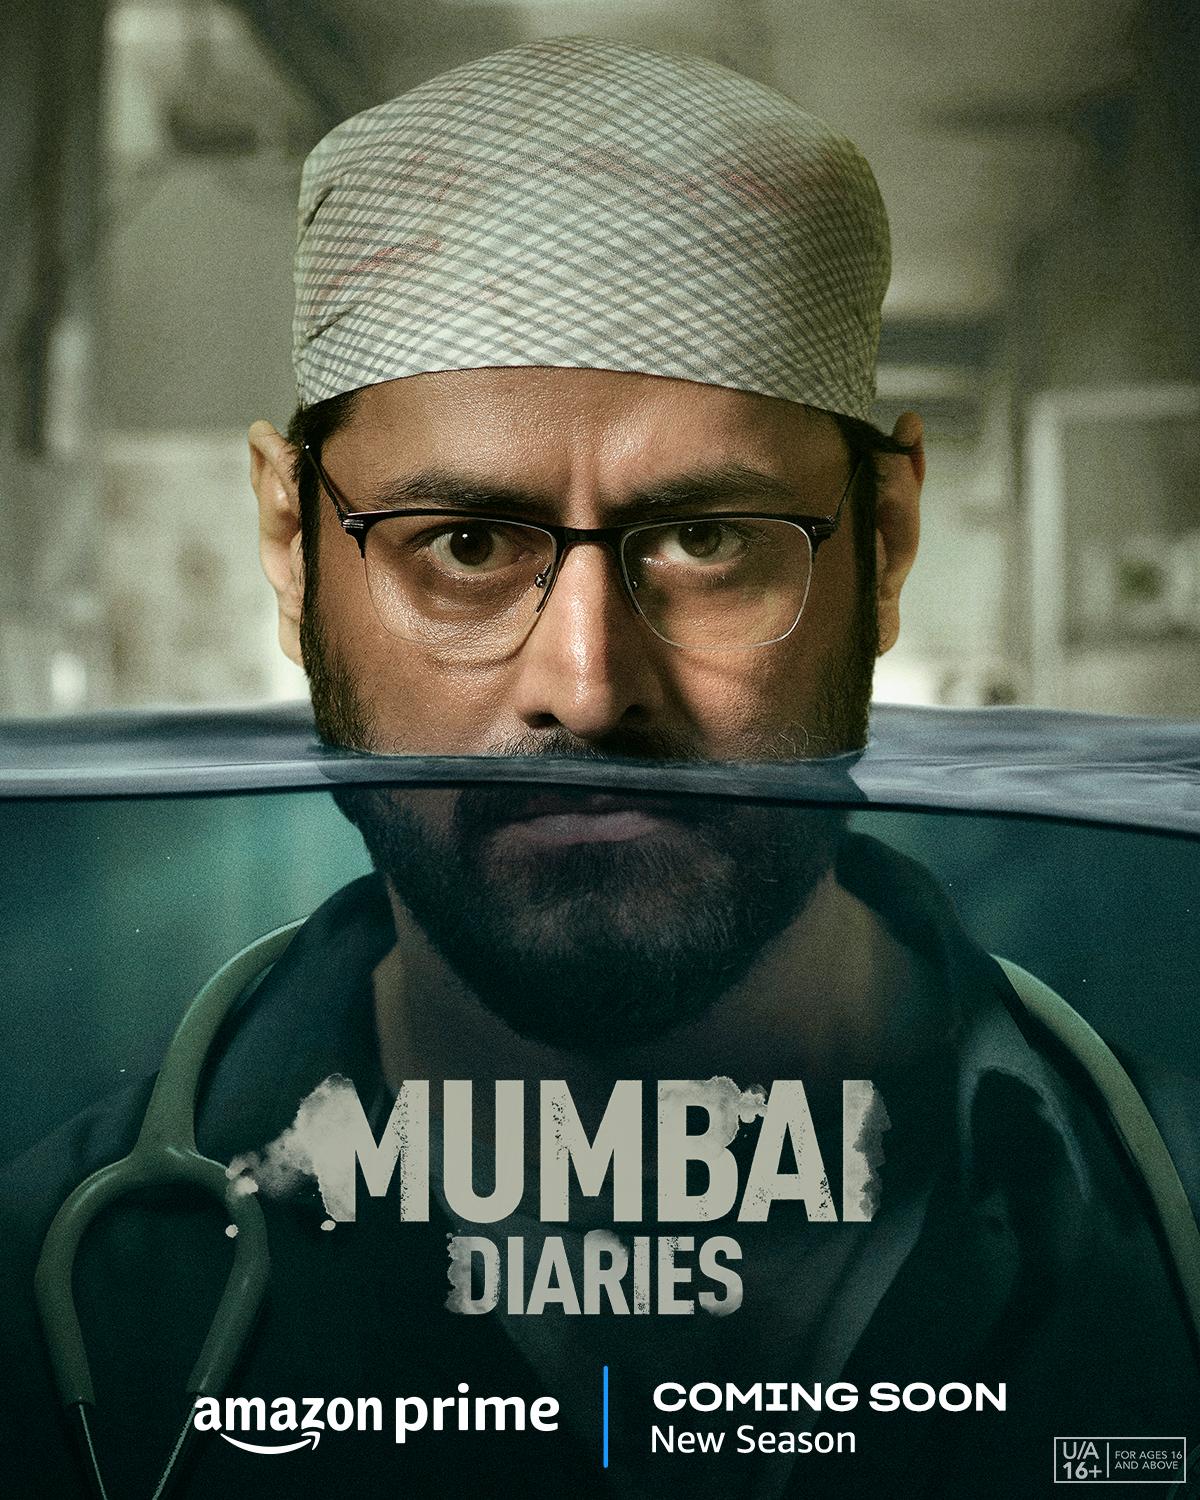 Mumbai Diaries season 2 (October 6) - Streaming on Prime VideoReturning to Prime Video on October 6 is 